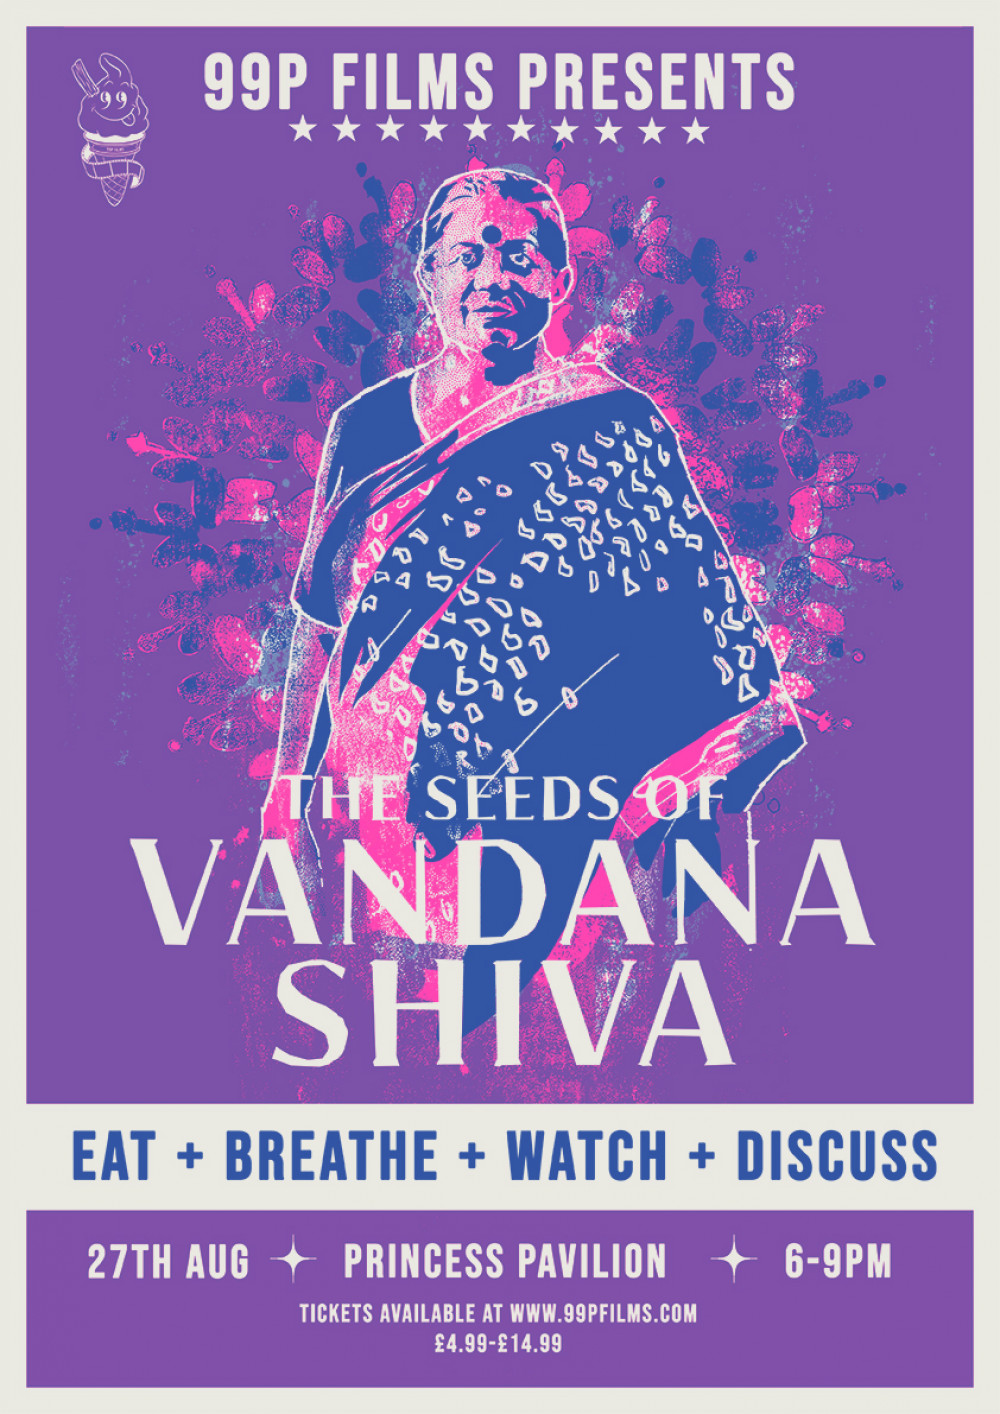 99p Films presents - The seeds of Vandana Shiva